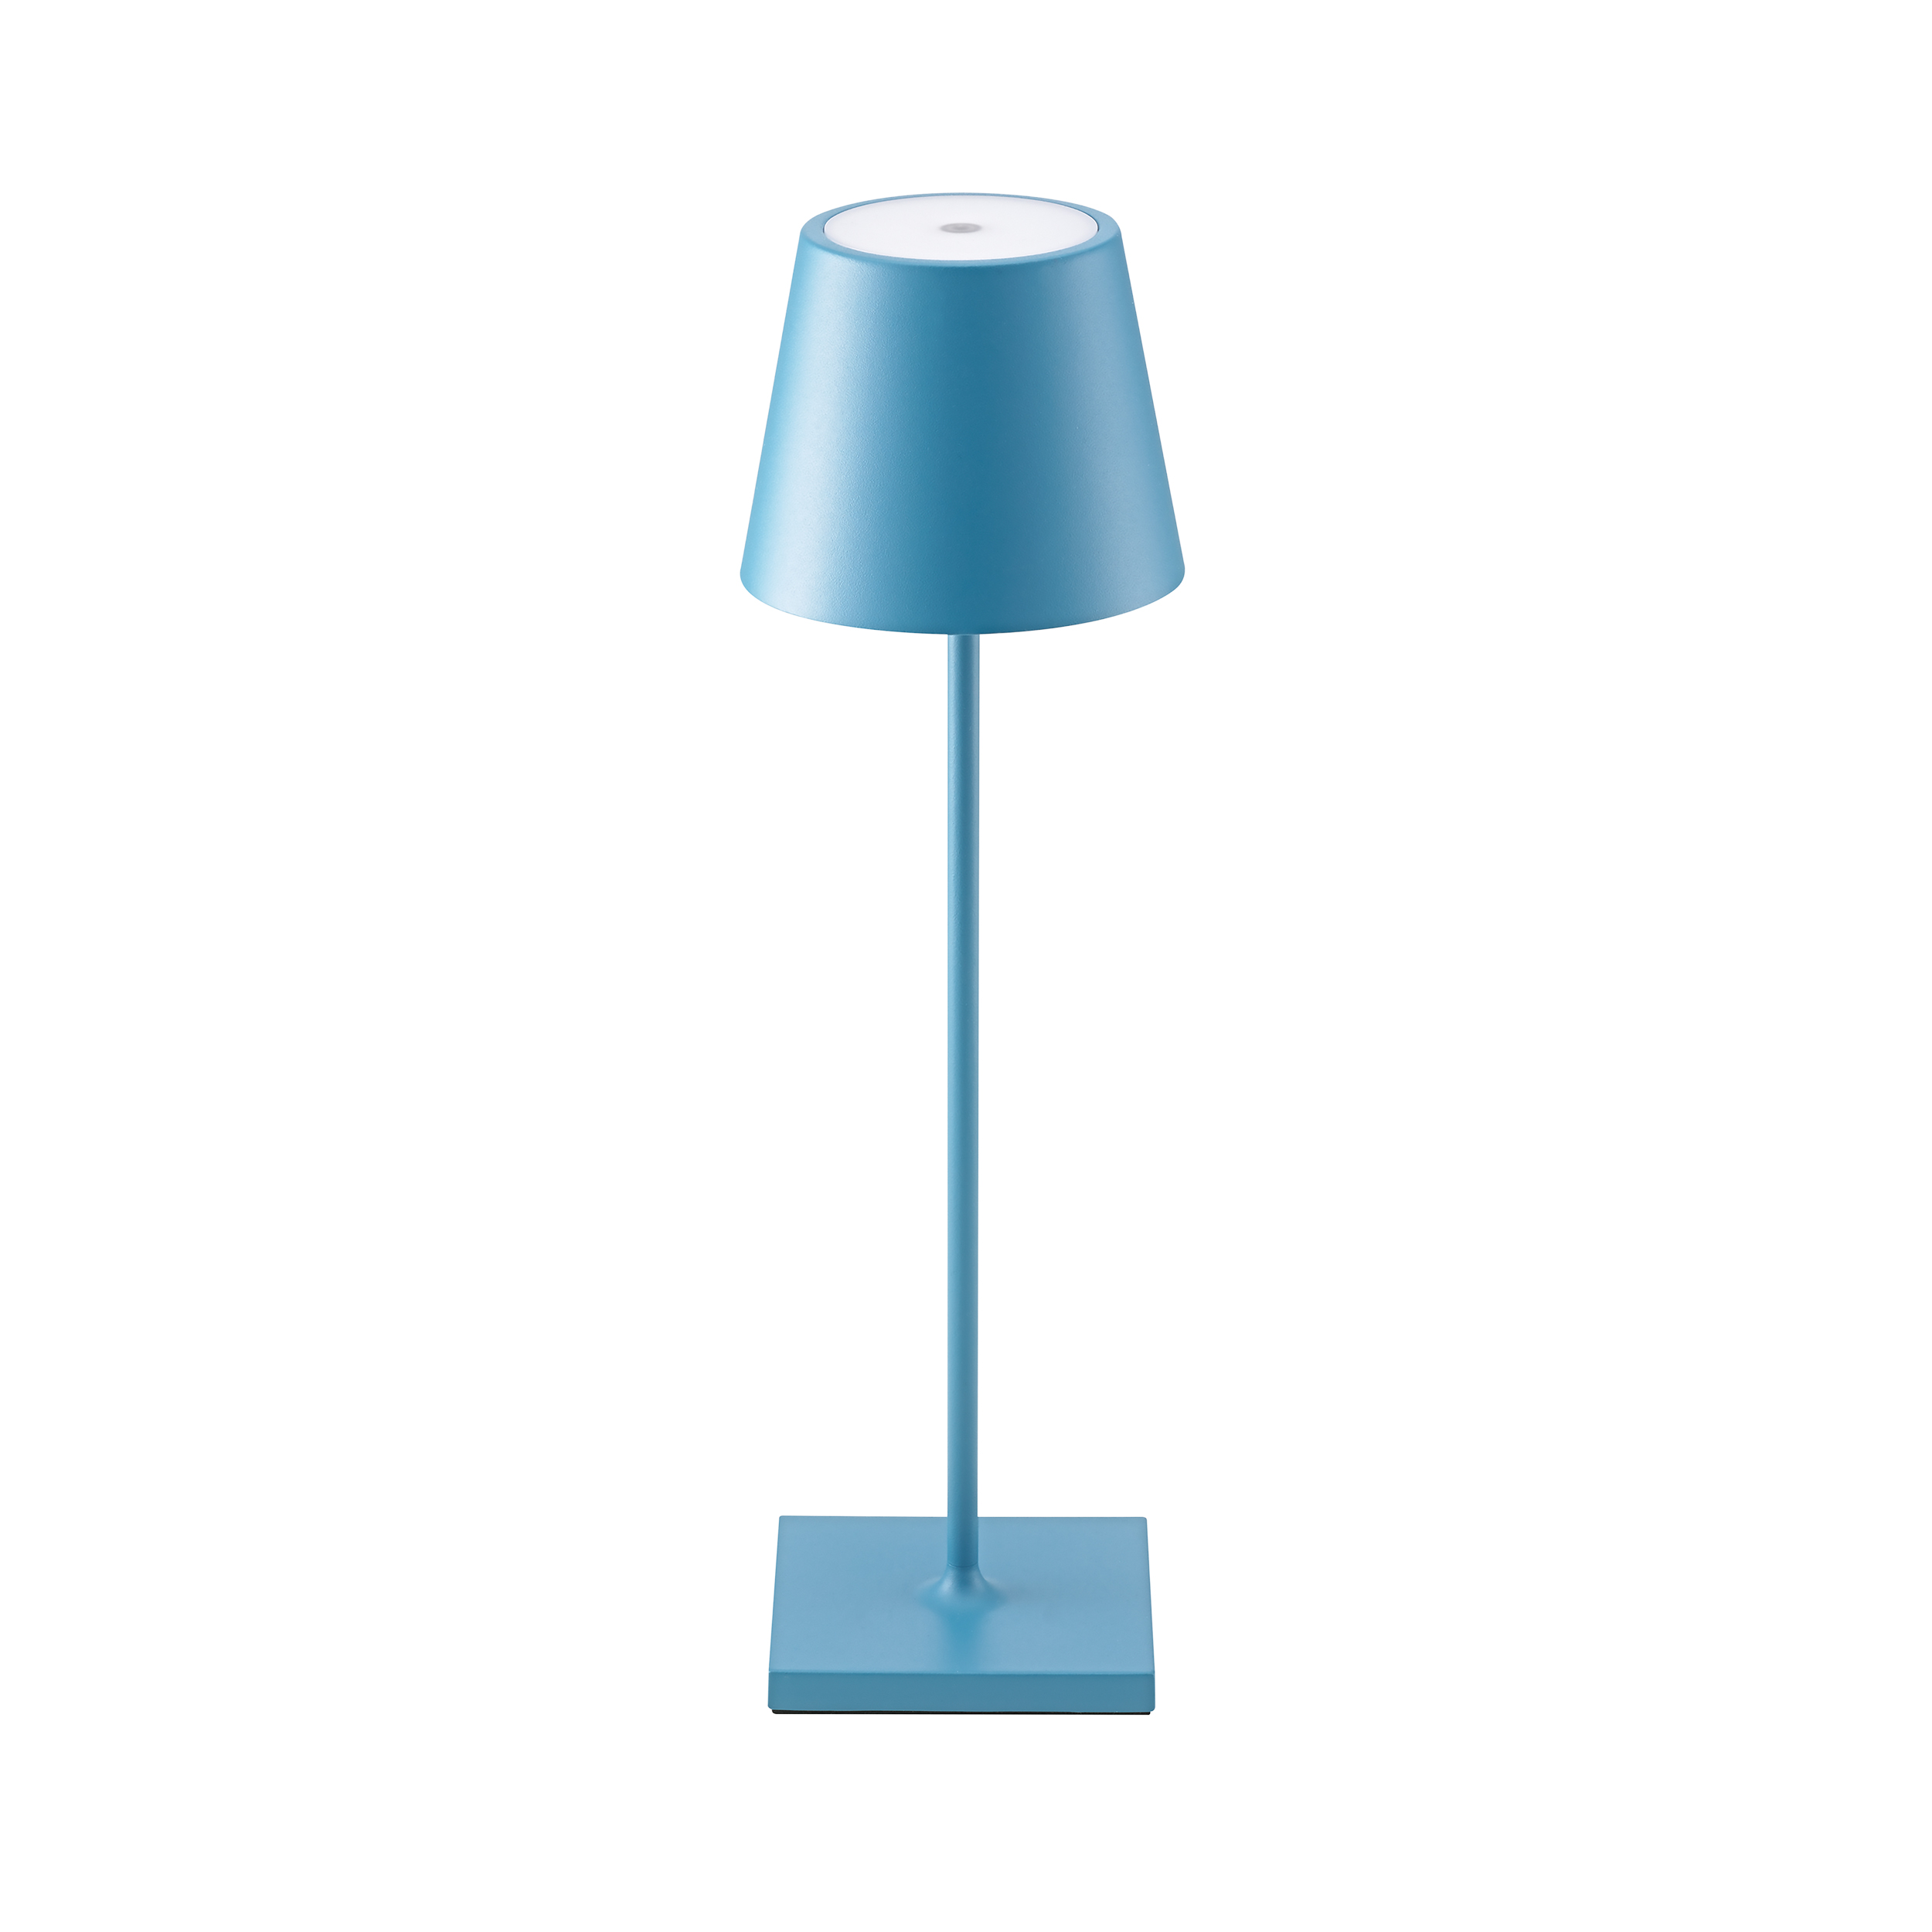 NUINDIE Delfinblau SIGOR Lamp LED warmweiss Table